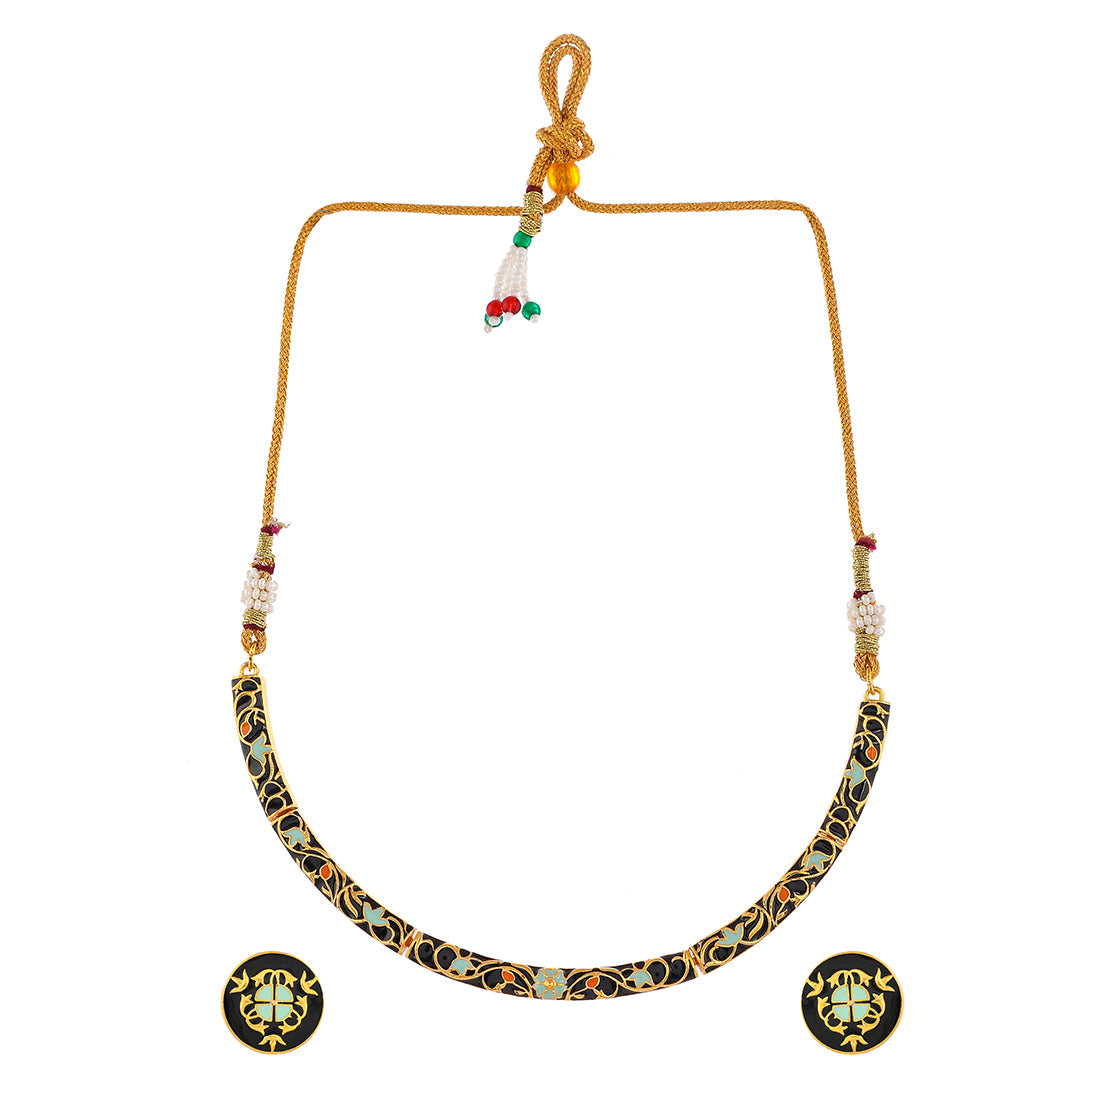 Women's Enameled Elegance Black Gold-Plated Necklace Set - Voylla